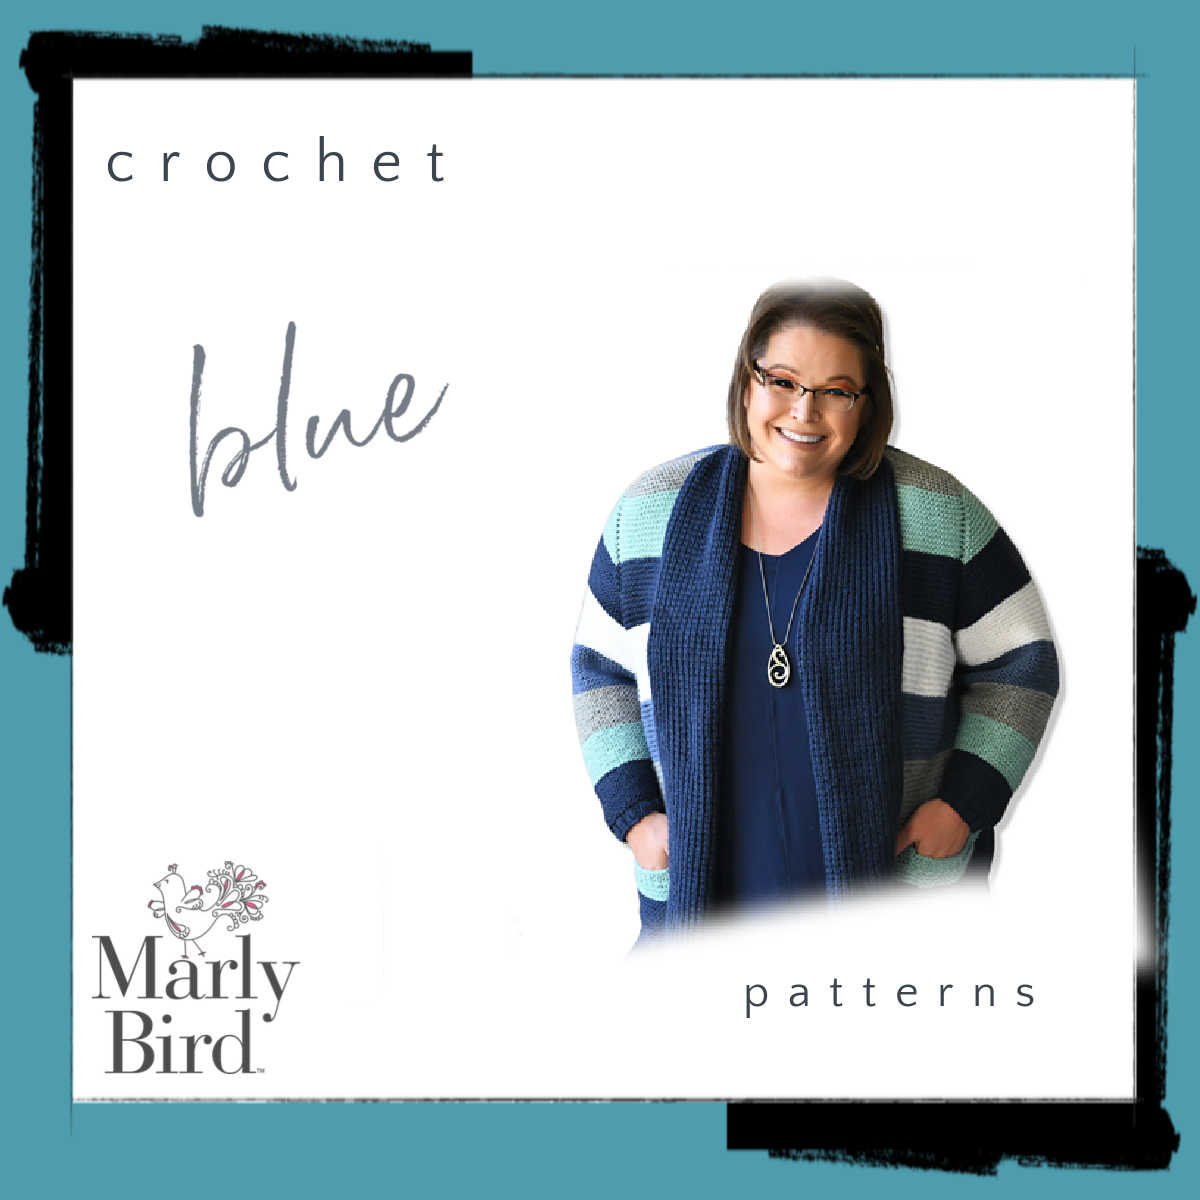 blue crochet patterns by Marly Bird